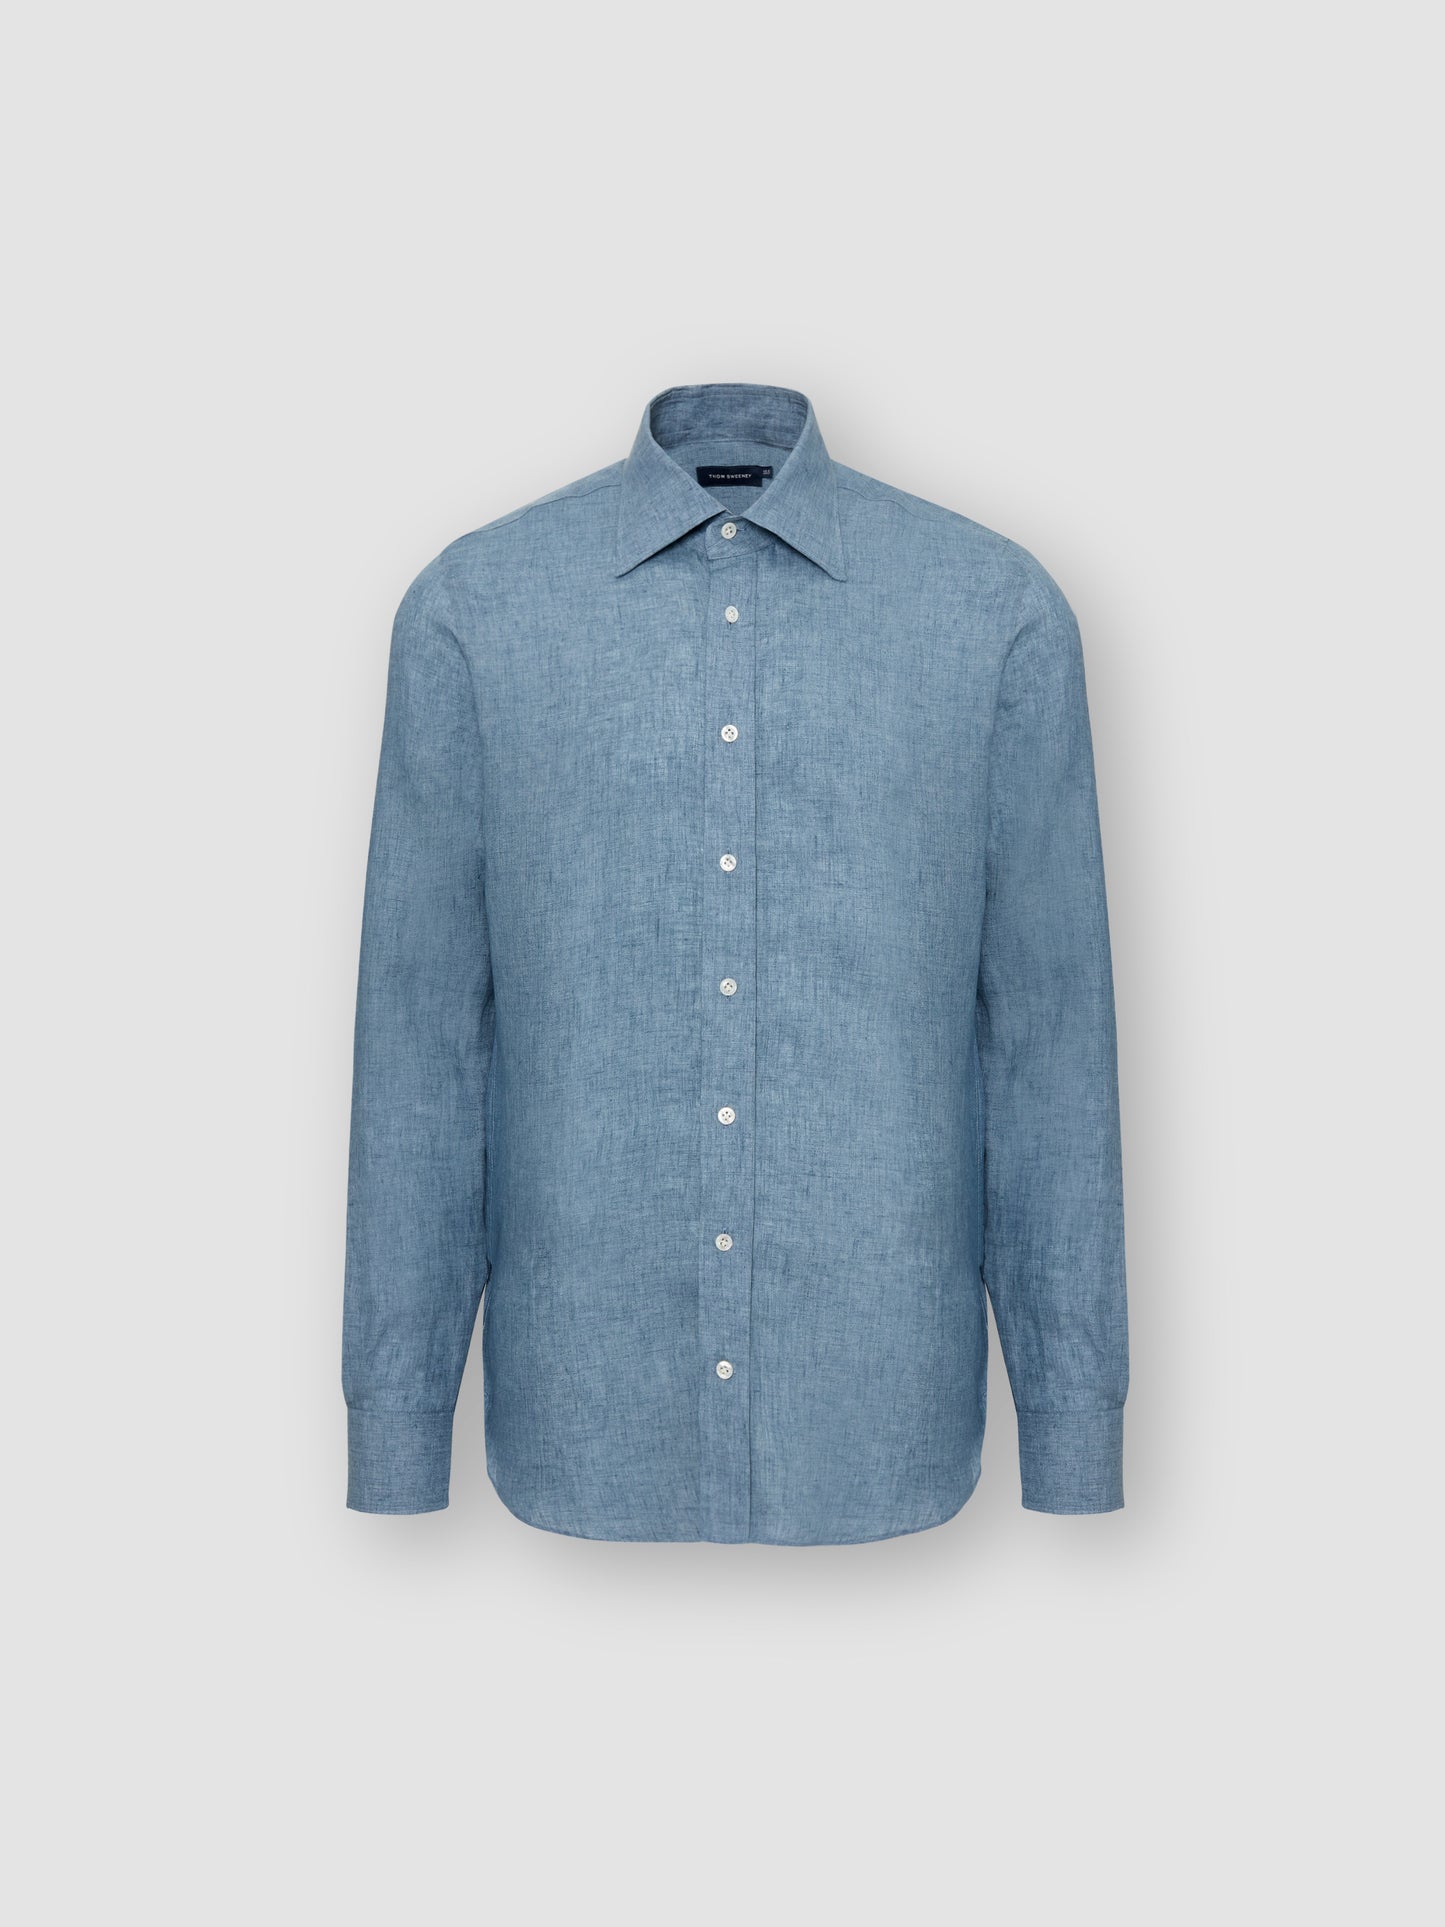 Lecce Collar Linen Shirt Slate Blue Product Image